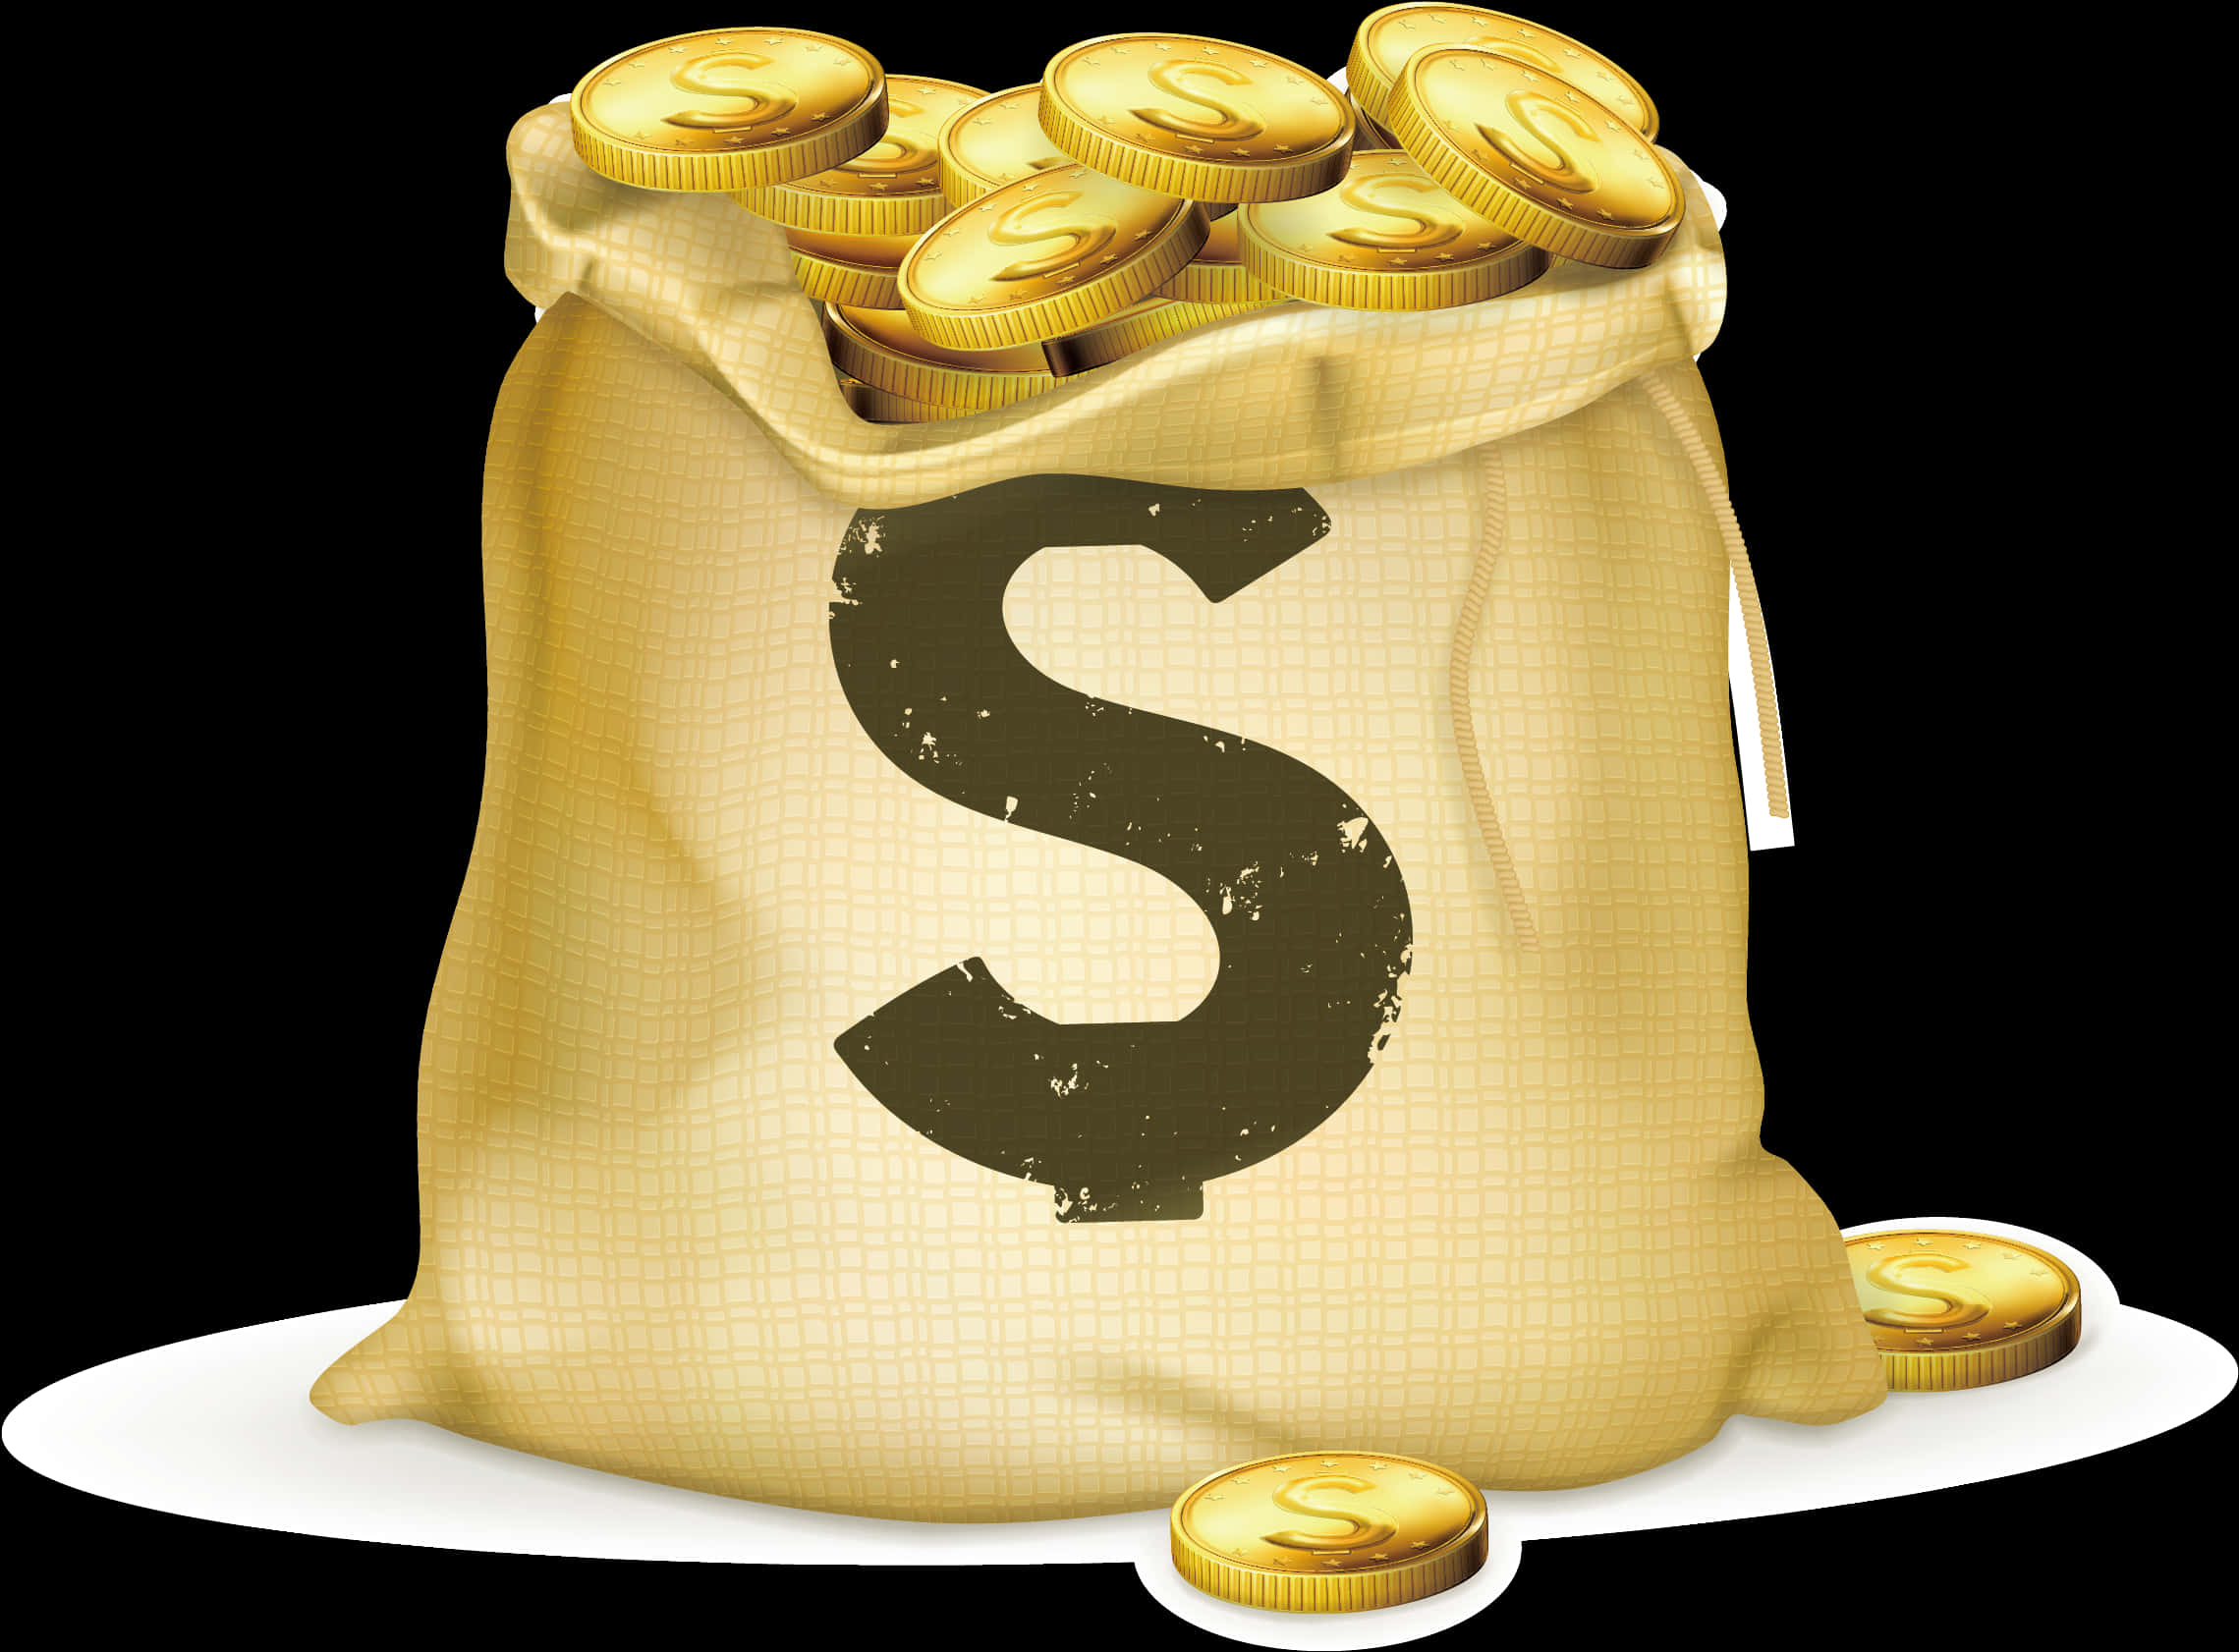 Money Bag Fullof Gold Coins